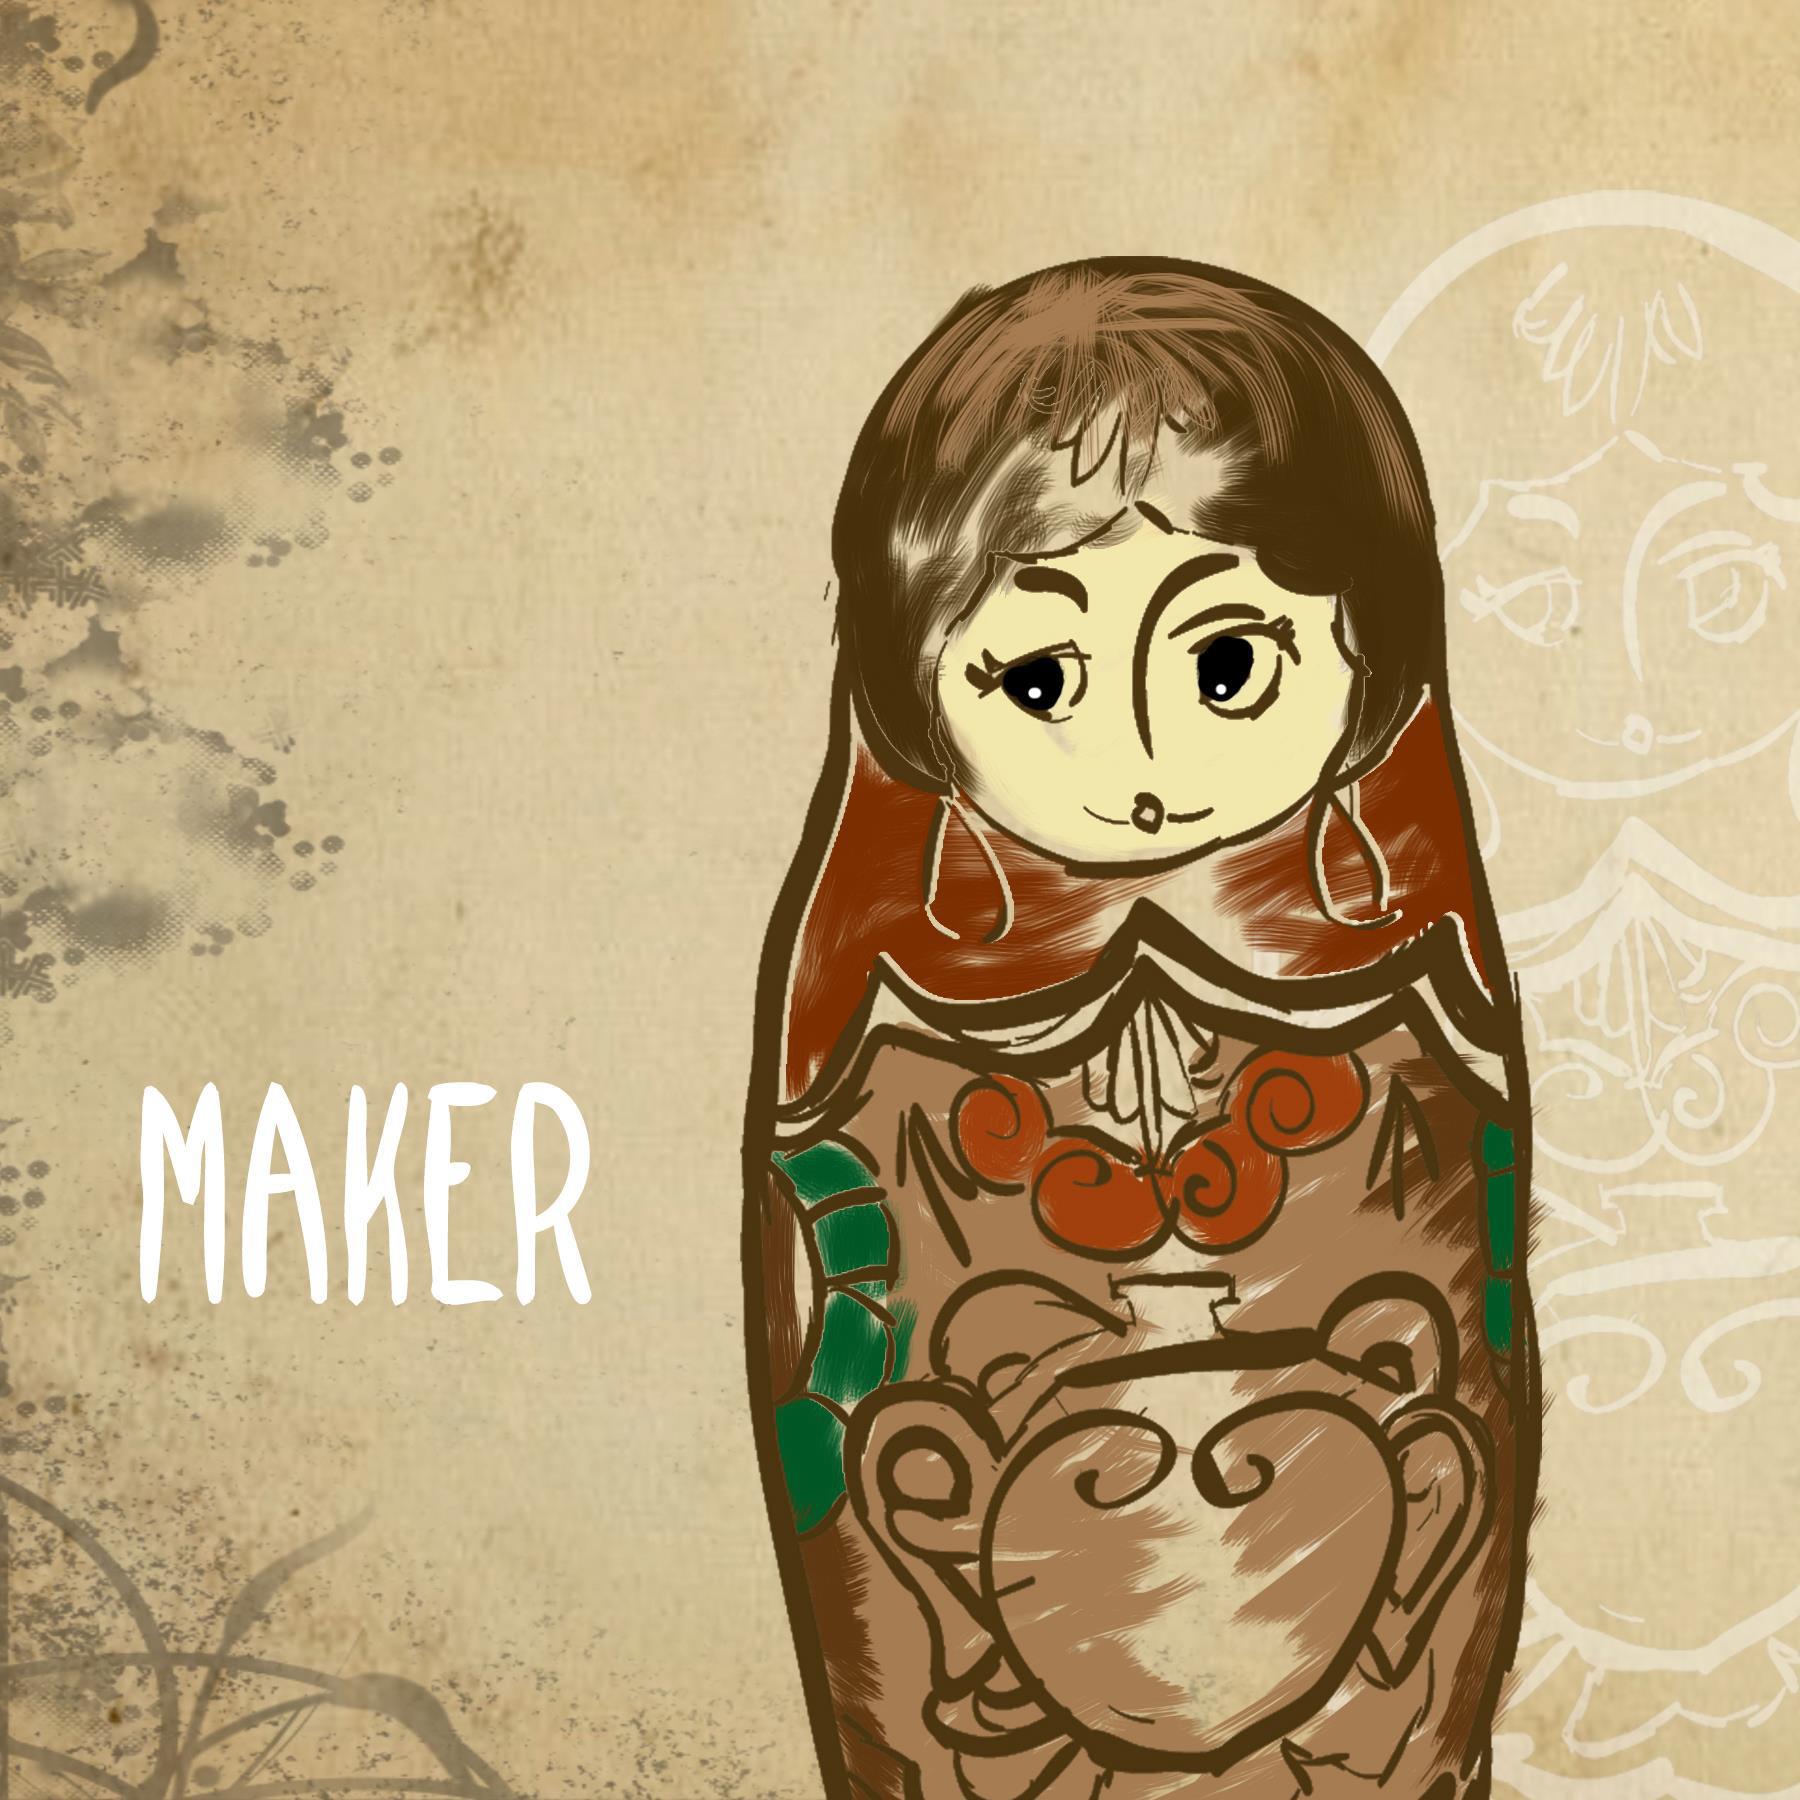 Maker streaming new EP